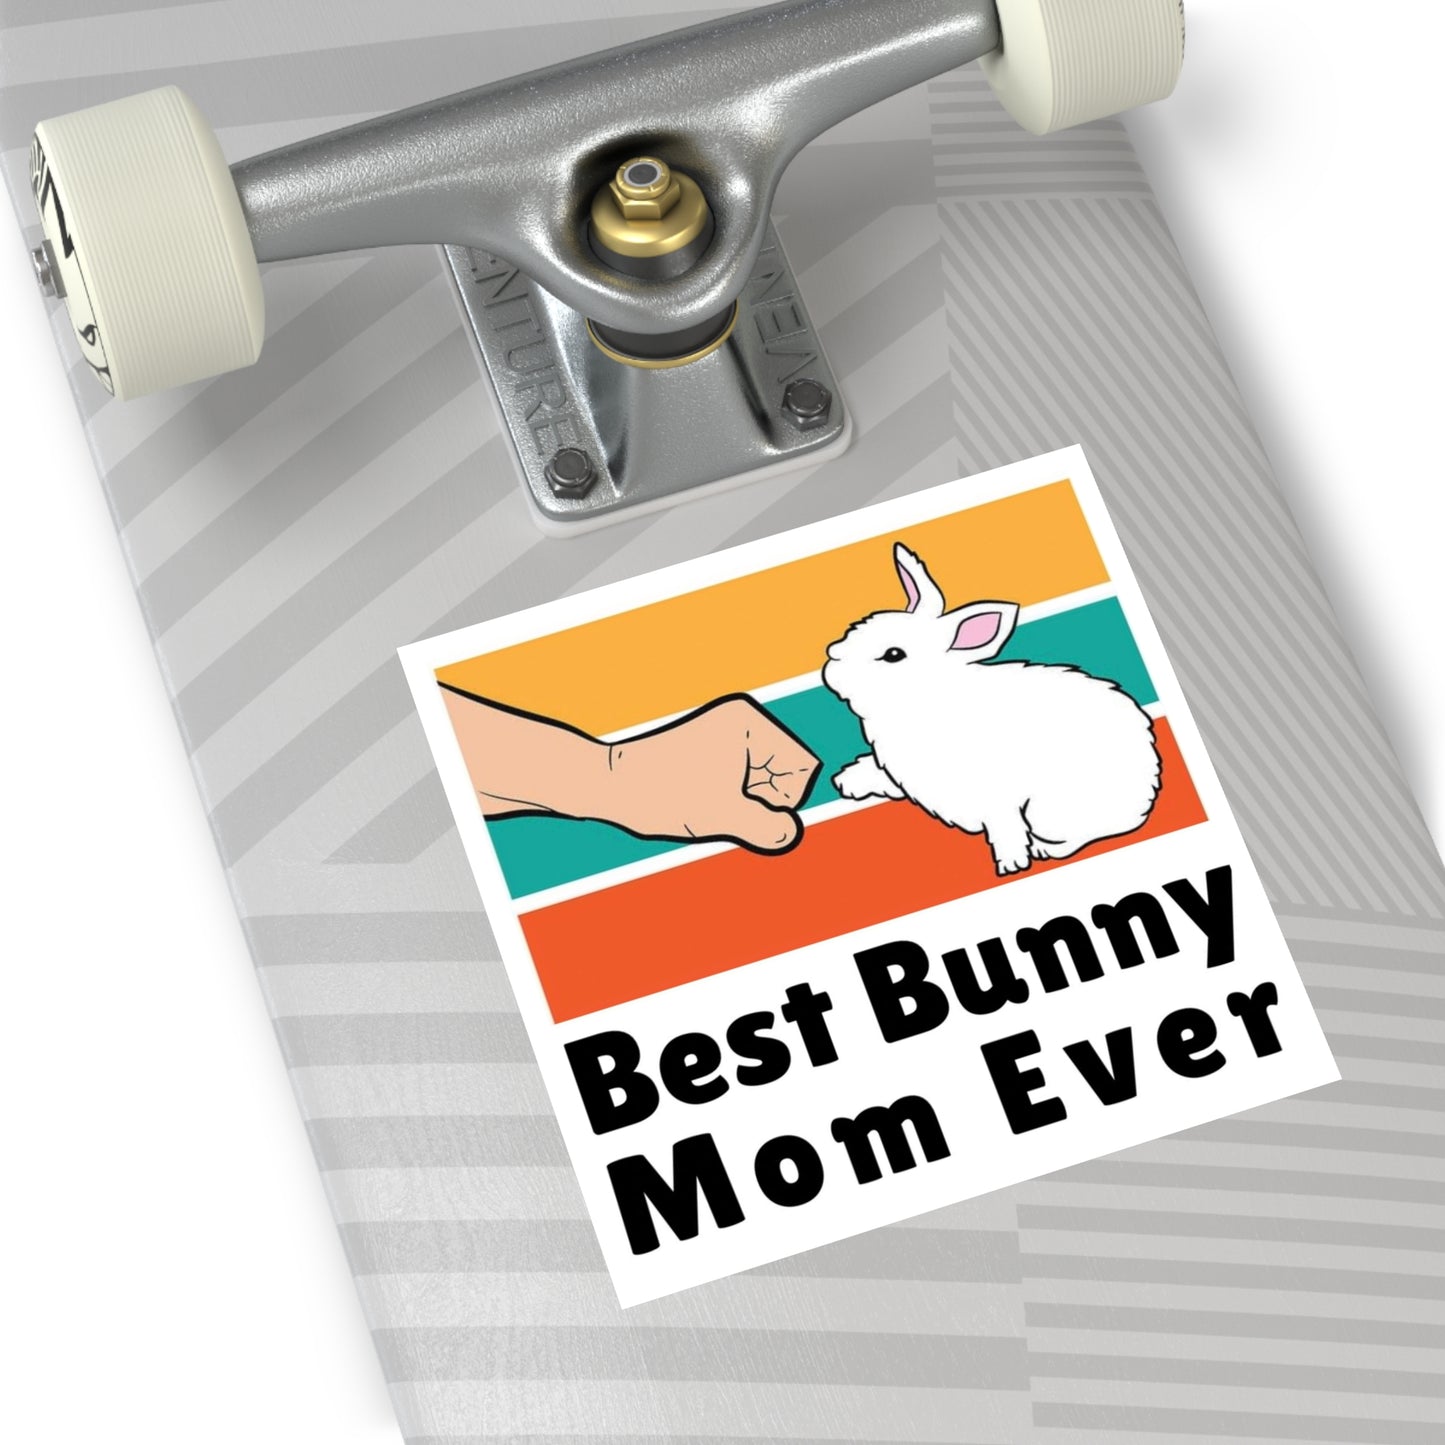 Best Bunny Mom Ever Sticker